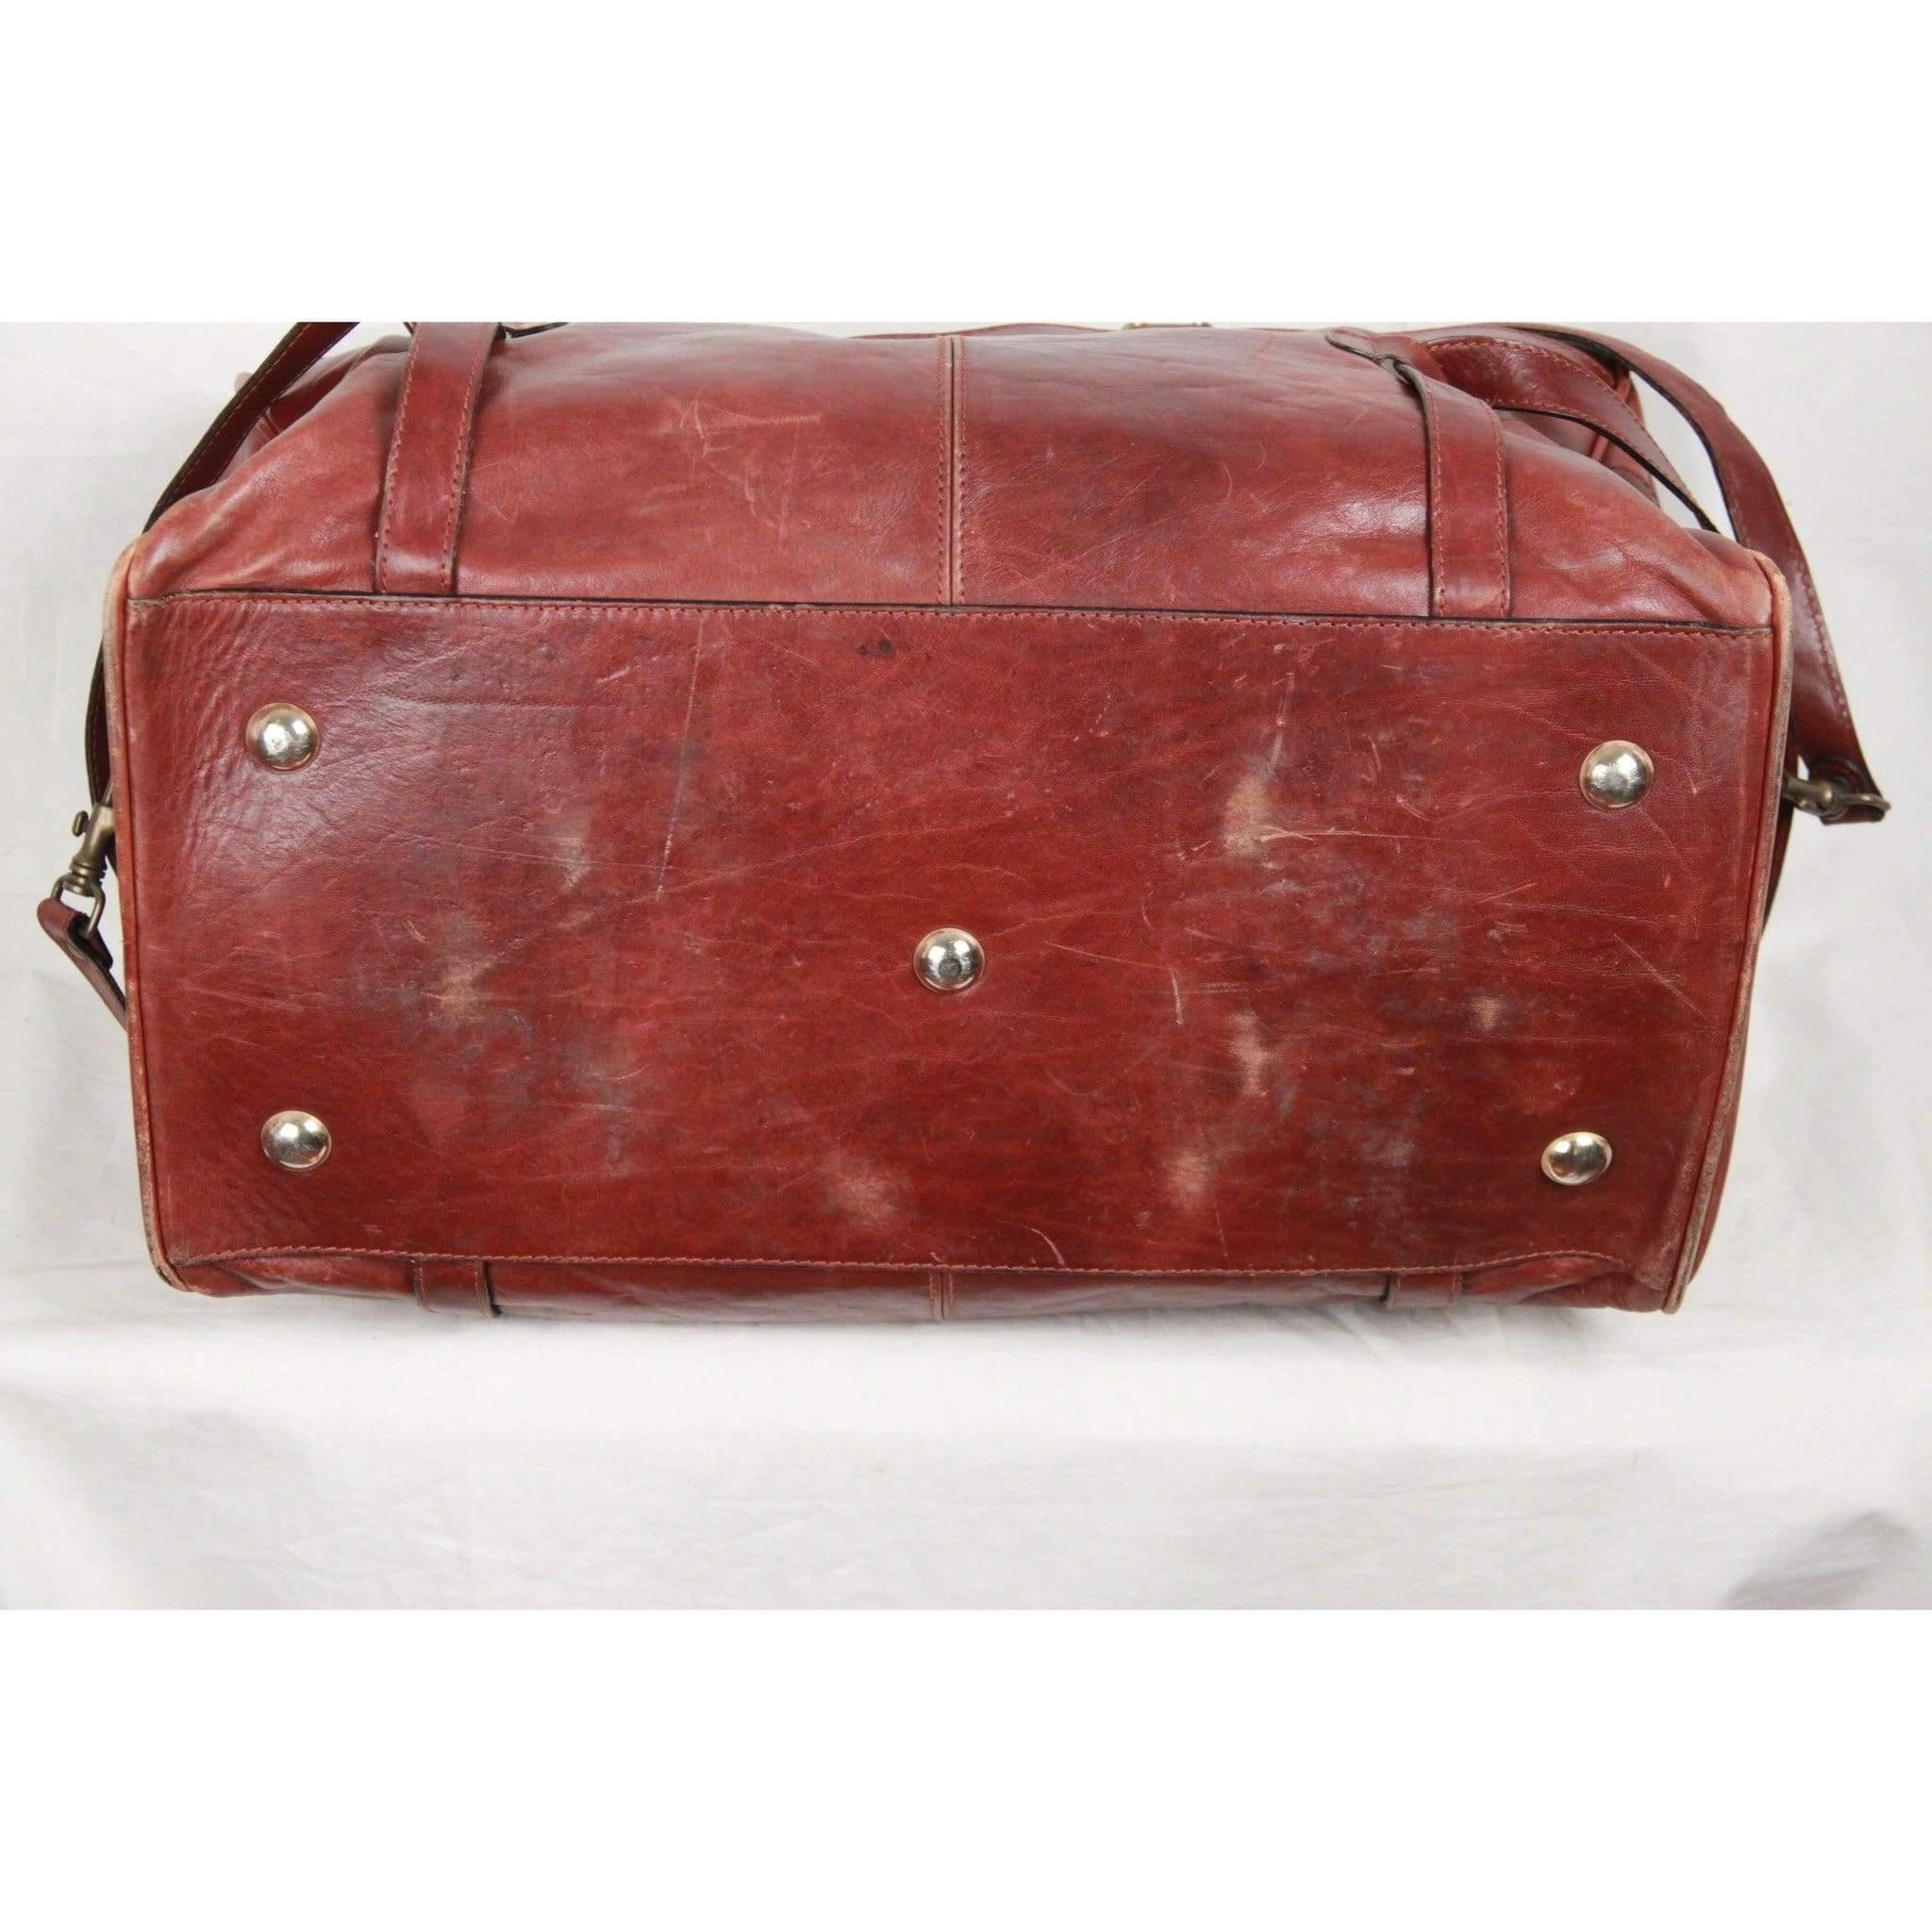 ALDO RAFFA Brown Leather DUFFLE TRAVEL BAG Carry On 2